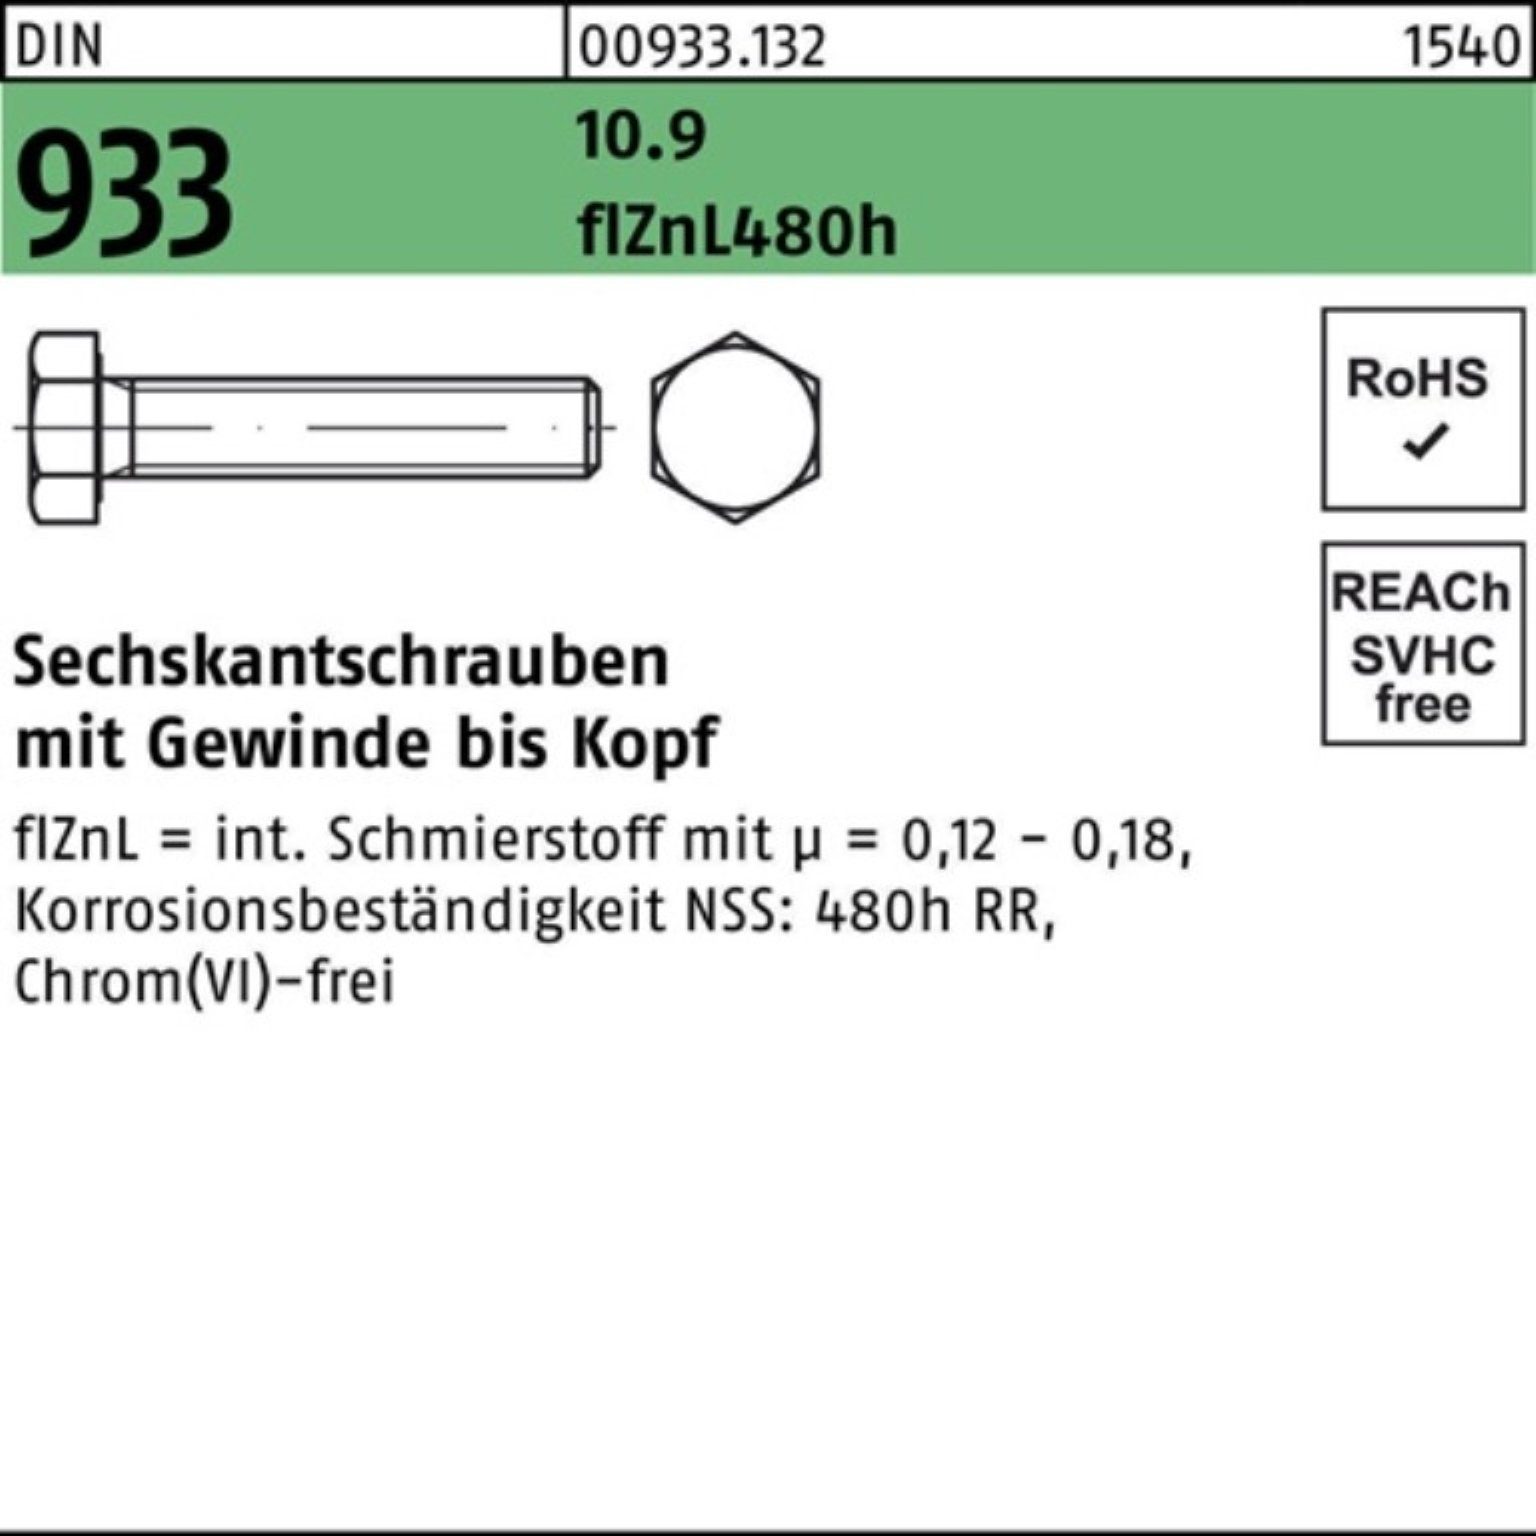 10.9 M20x Sechskantschraube Pack DIN Reyher Sechskantschraube 933 100er flZnL/nc/x/x/480 VG 120